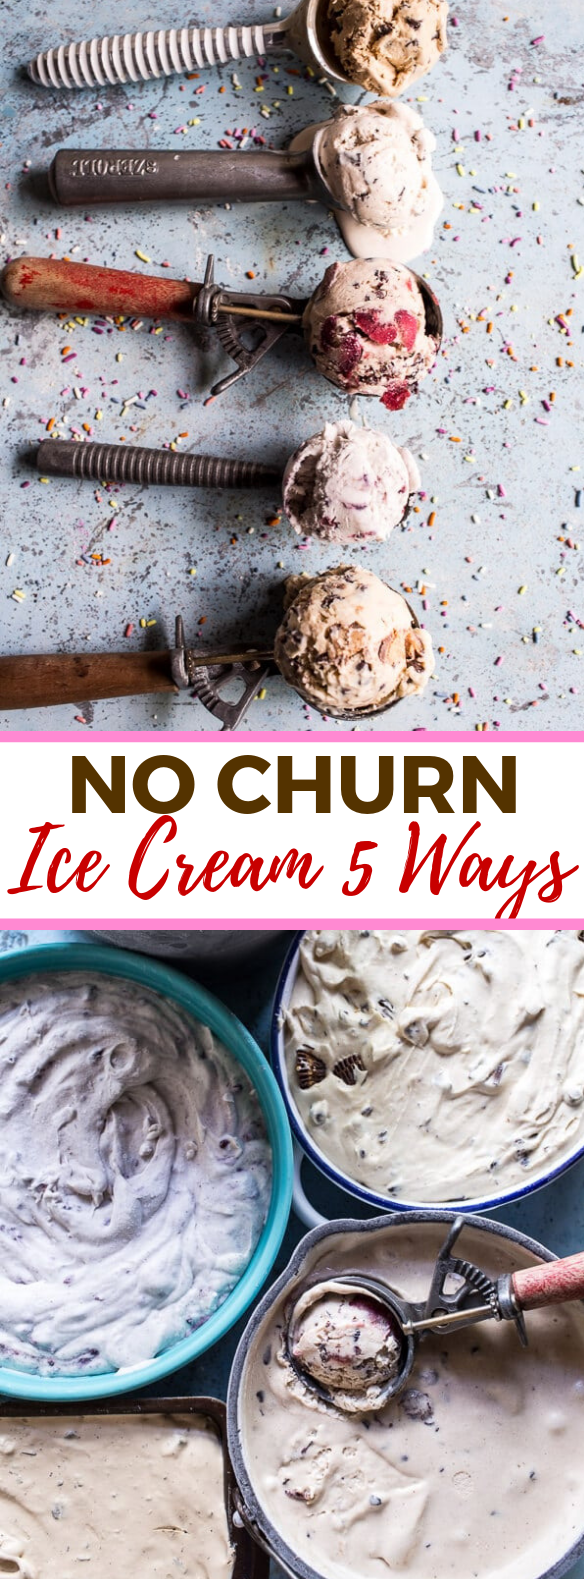 No Churn Ice Cream 5 Ways #dessert #chocolate